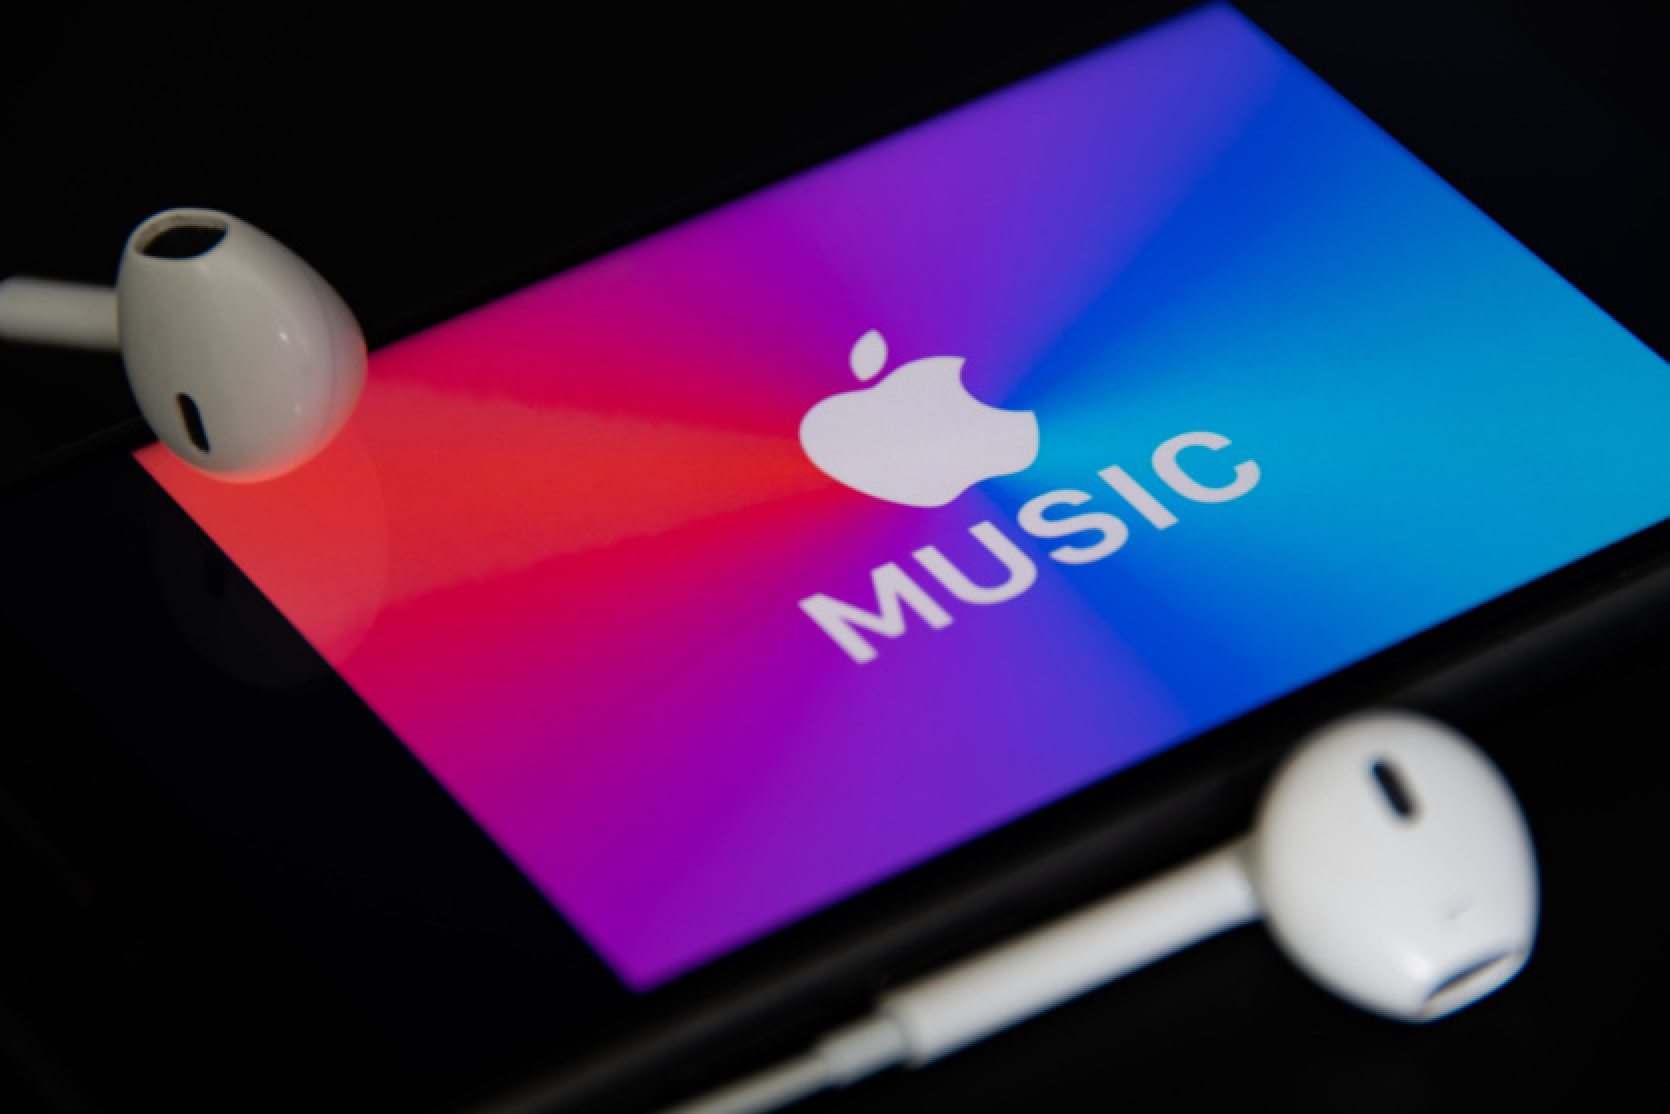 EU fines Apple $2 billion over Spotify's complaint about 'blocking' alternative music apps